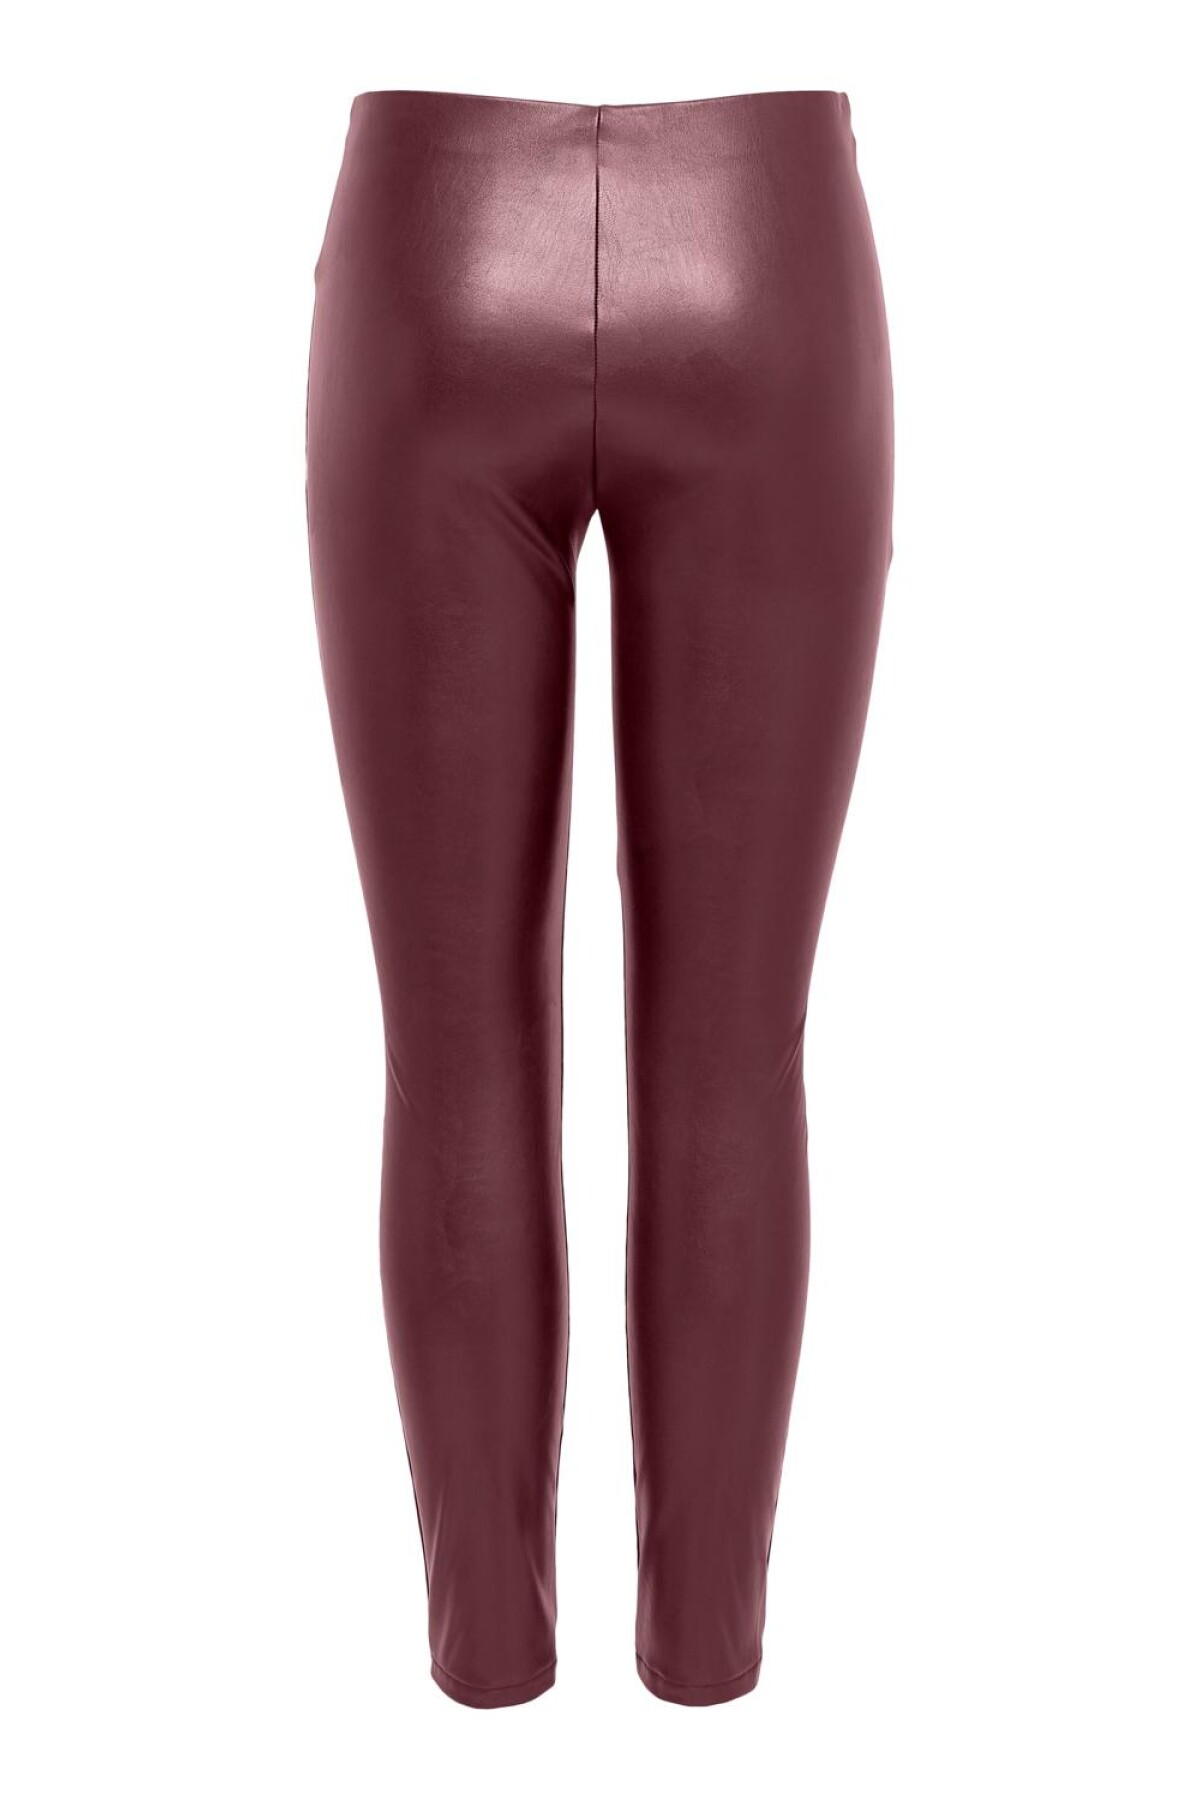 https://f.fcdn.app/imgs/3ee1b9/only.com.uy/onlyuy/f310/original/catalogo/15210614_3453830_2/1200x1800/pantalon-tipo-leggings-vigga-efecto-piel-tawny-port.jpg